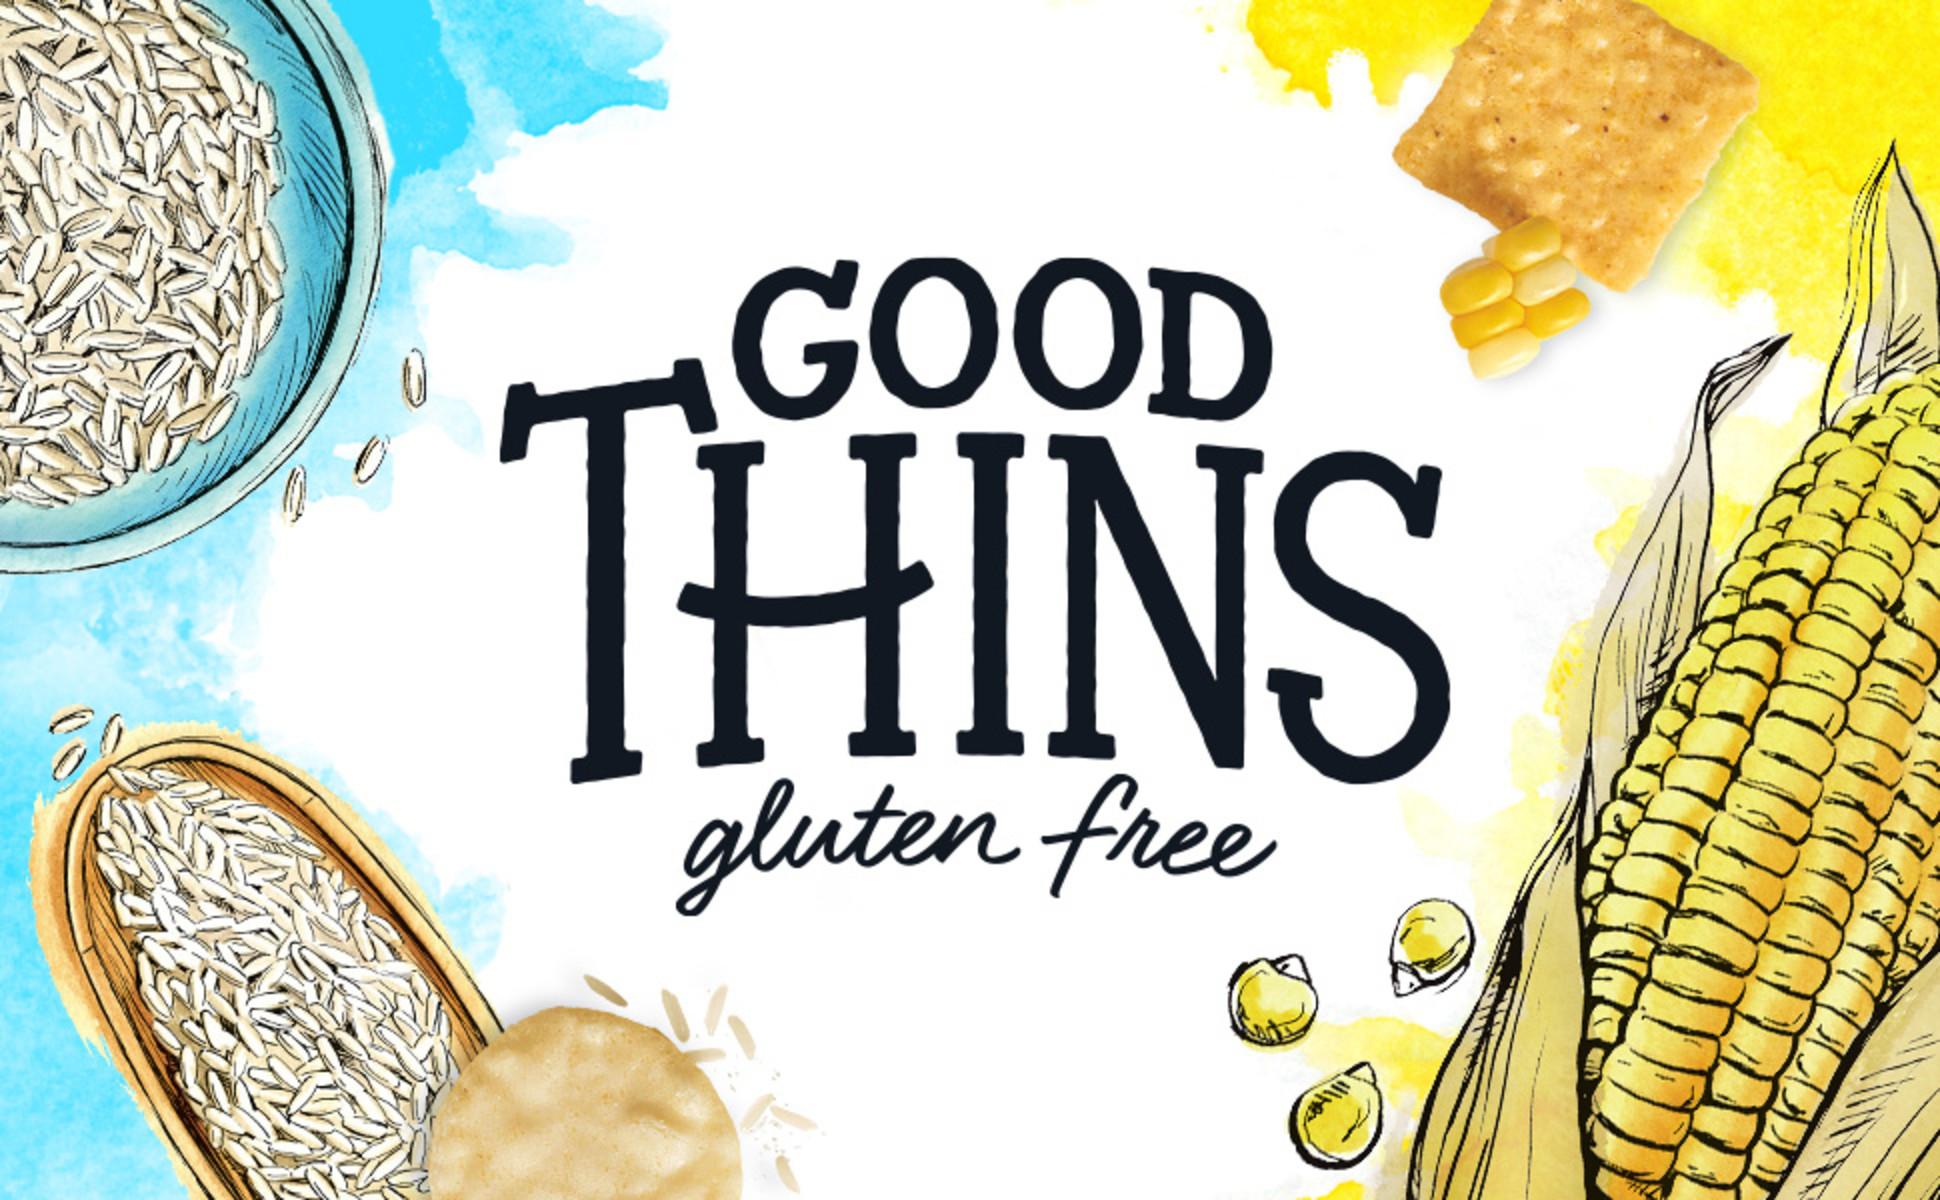 Good Thins Good thins- made with corn- sea salt Reviews